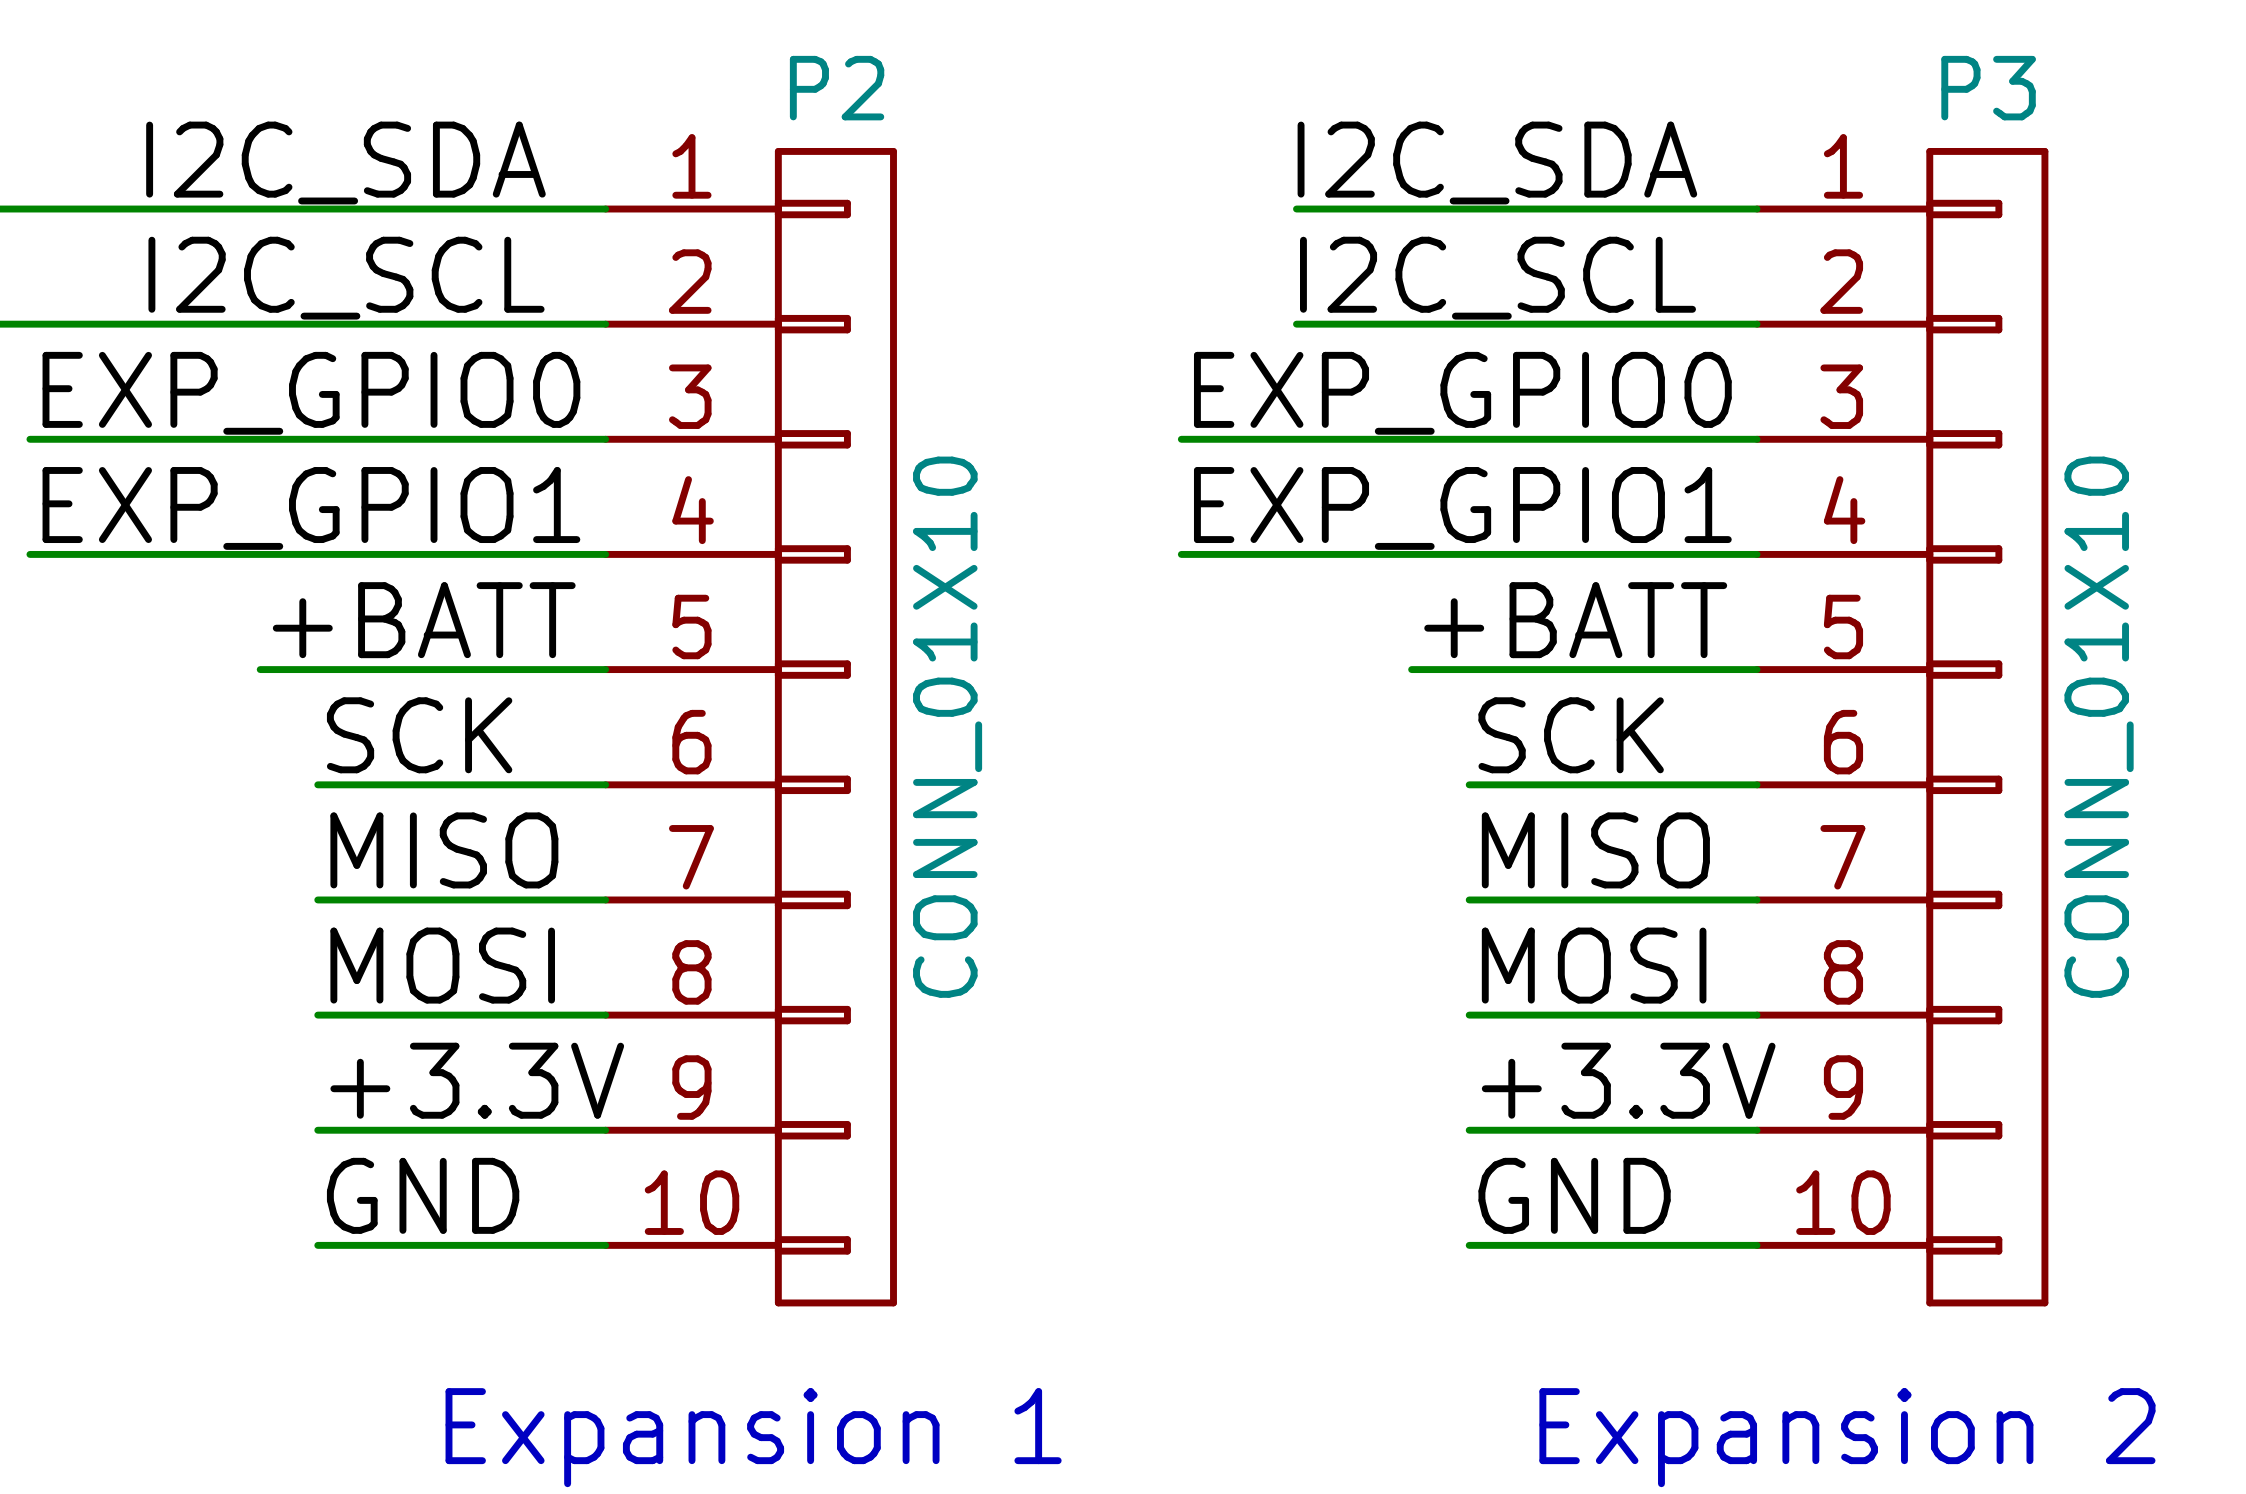 ../../_images/CodeBot_CB2-Expansion.png